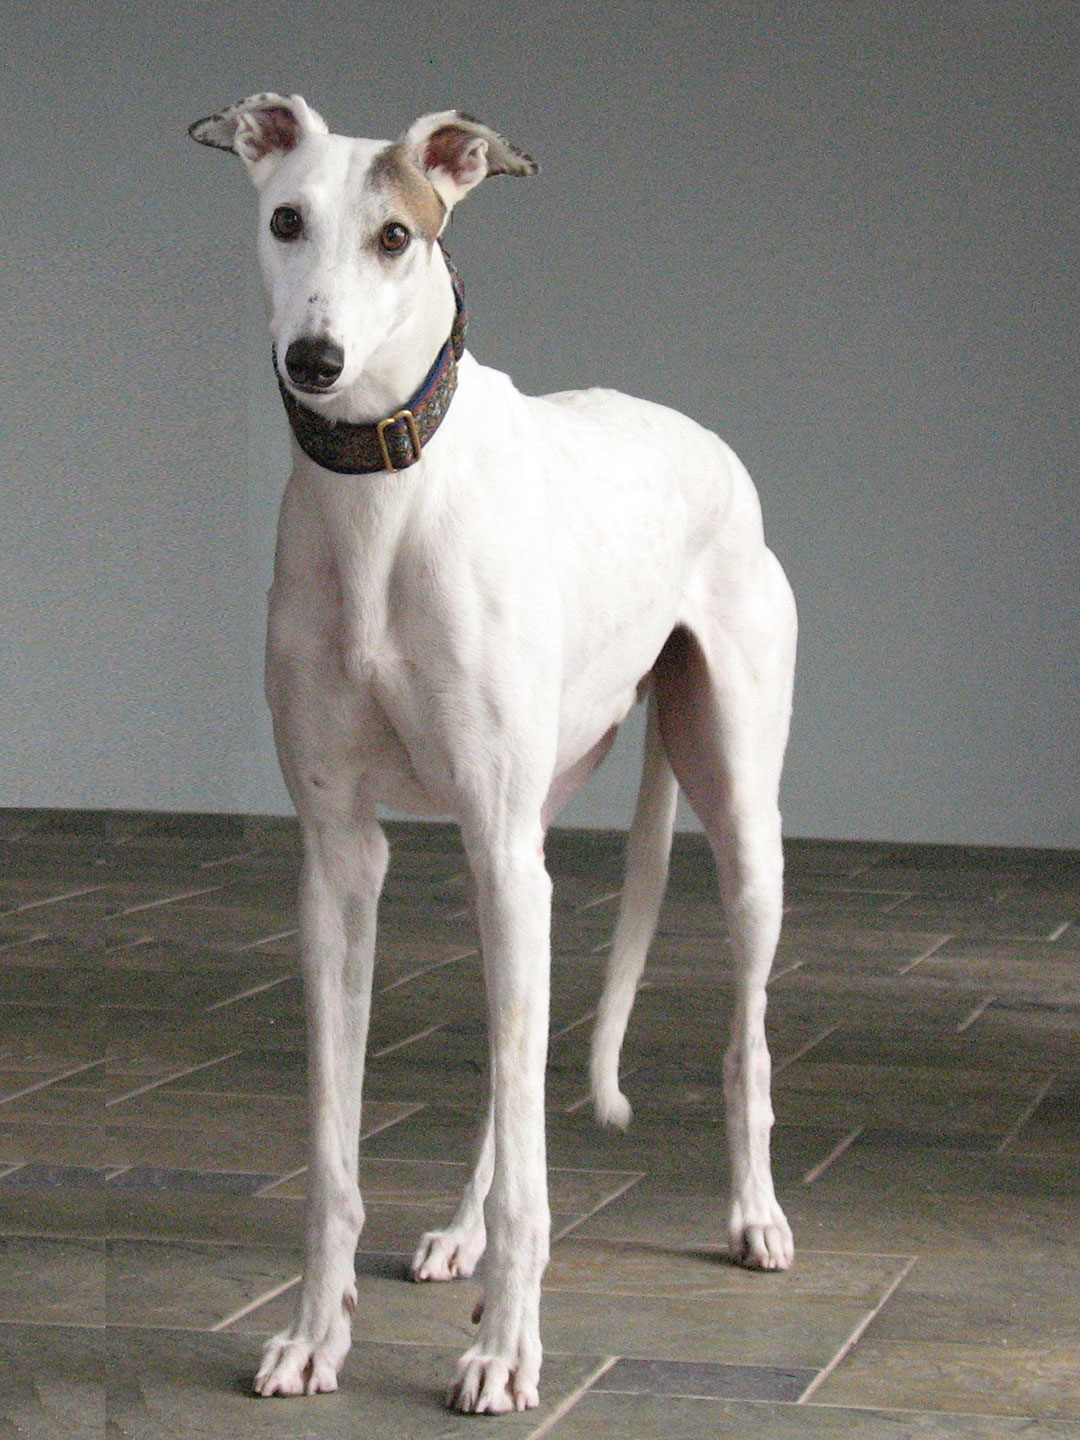 Takoda, a greyhound, standing